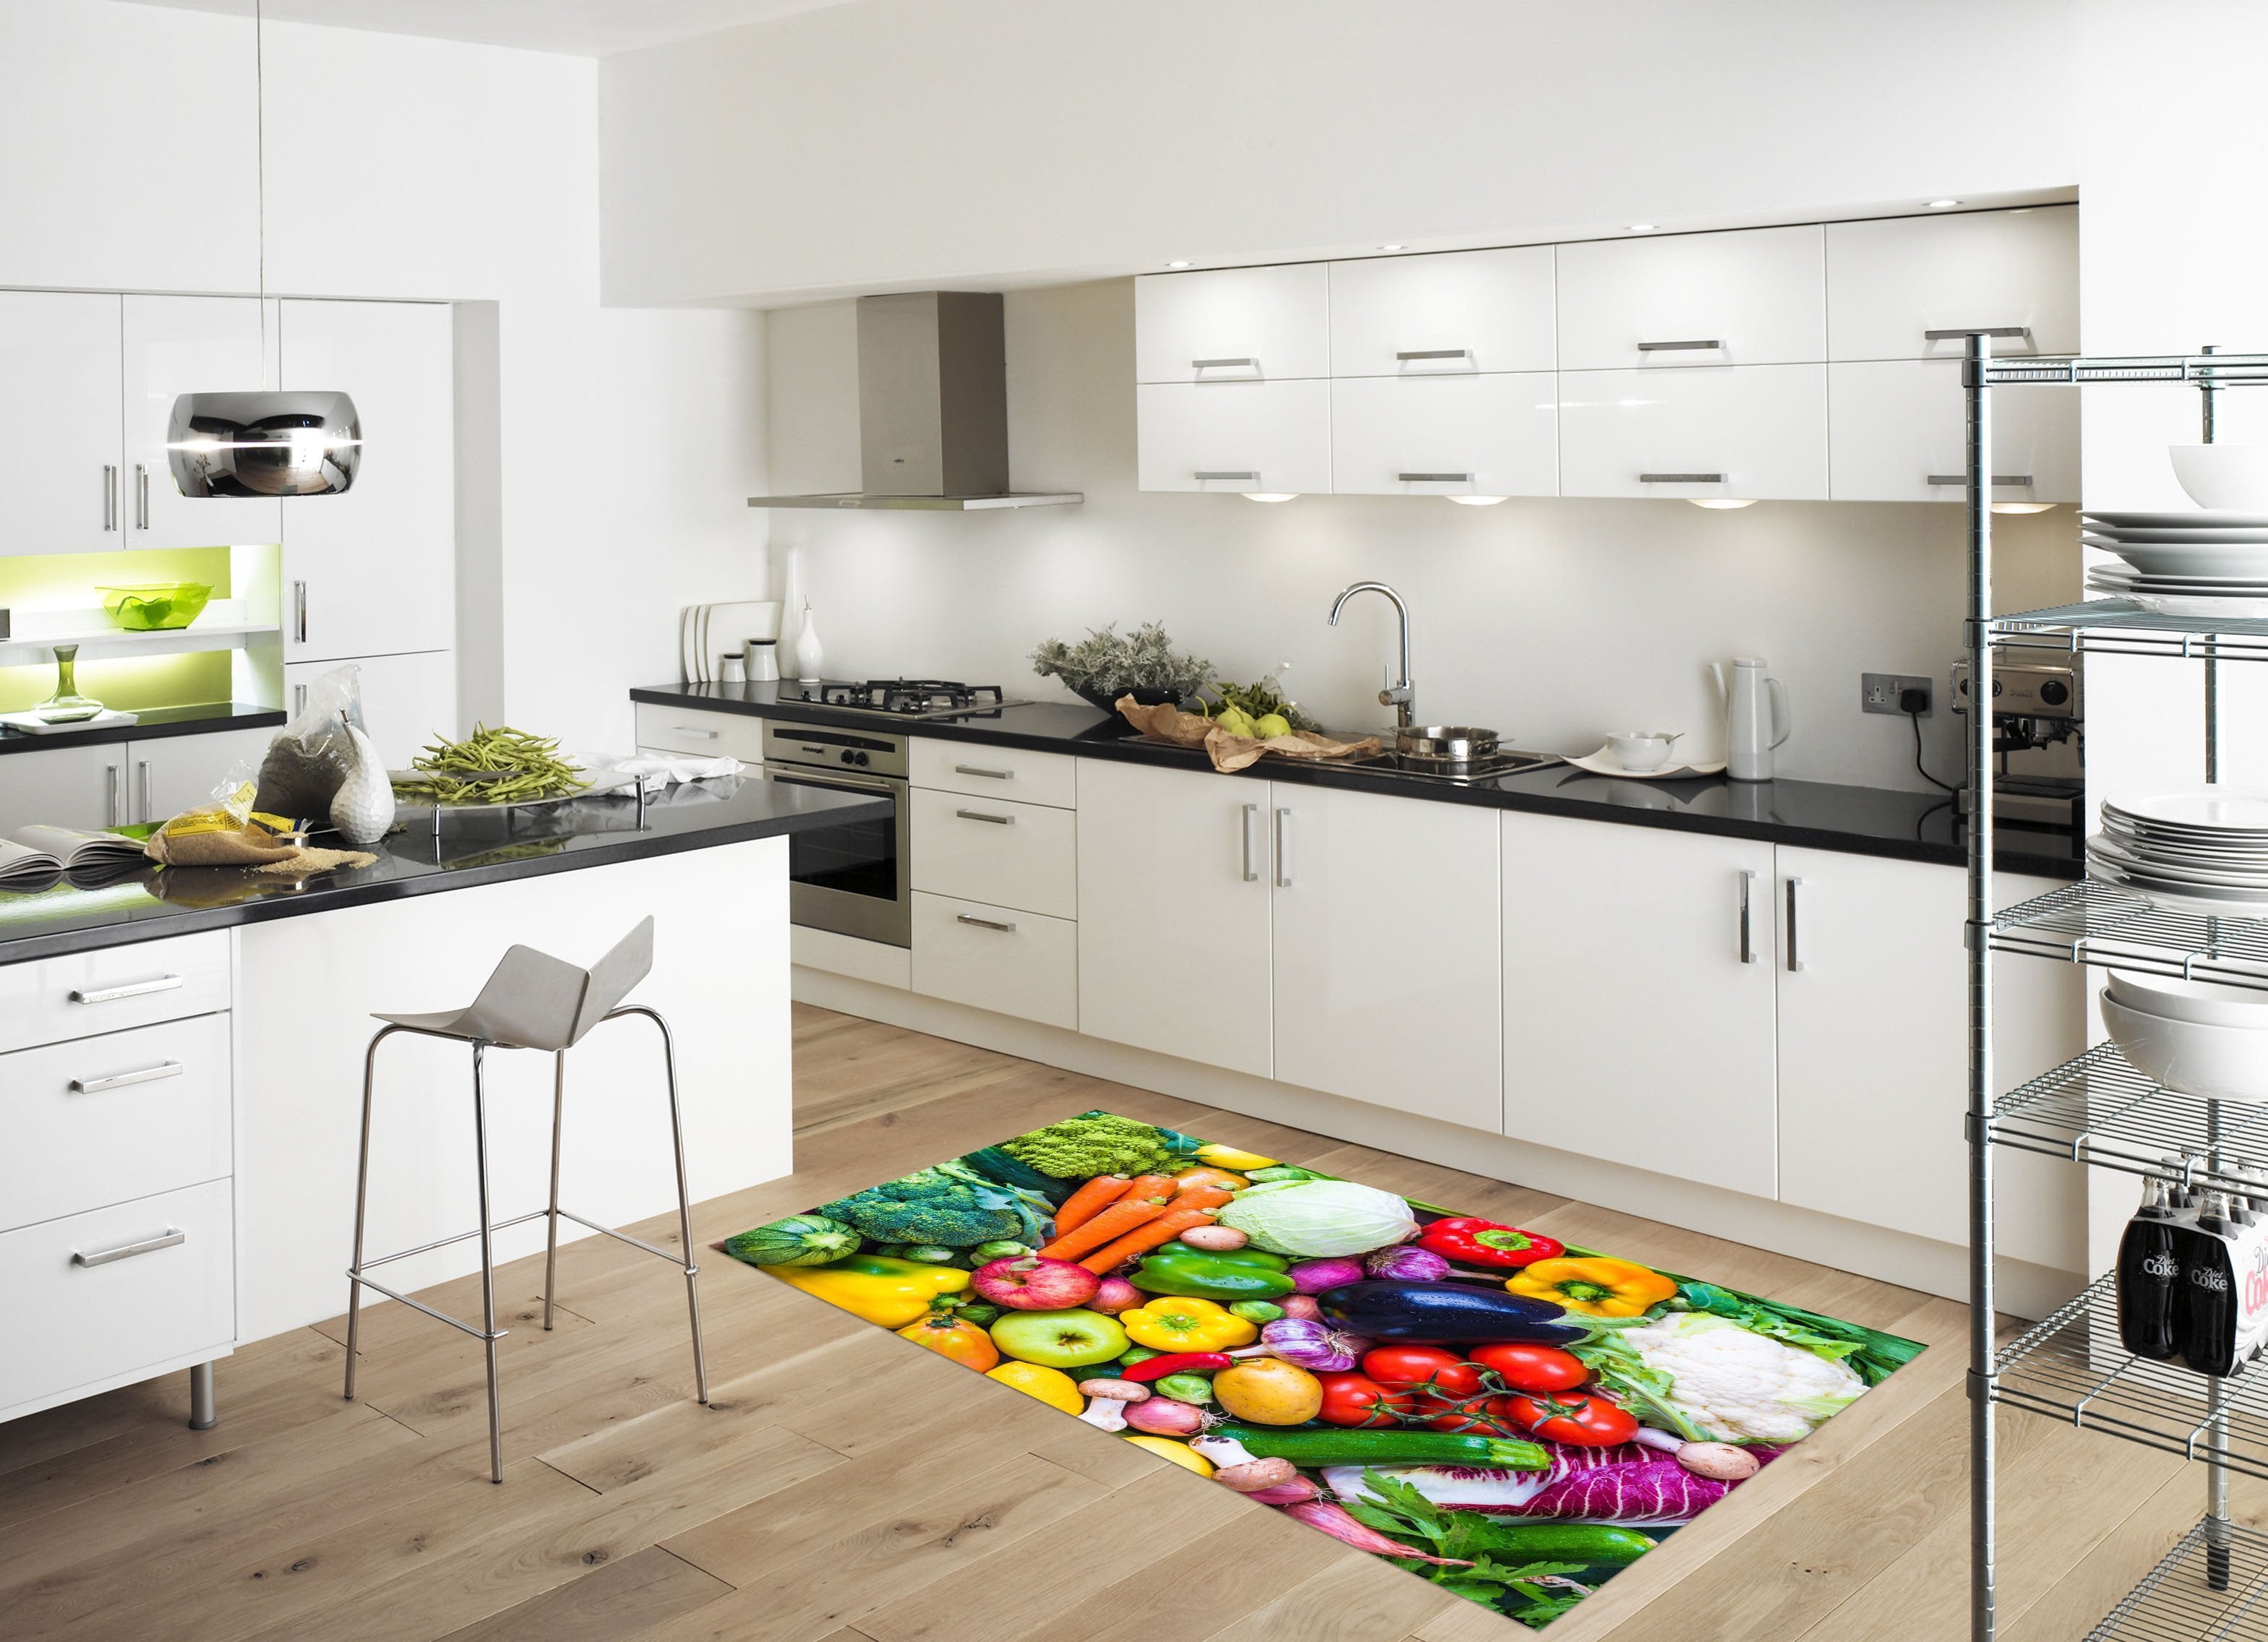 3D Colored Vegetables 583 Kitchen Mat Floor Mural Wallpaper AJ Wallpaper 